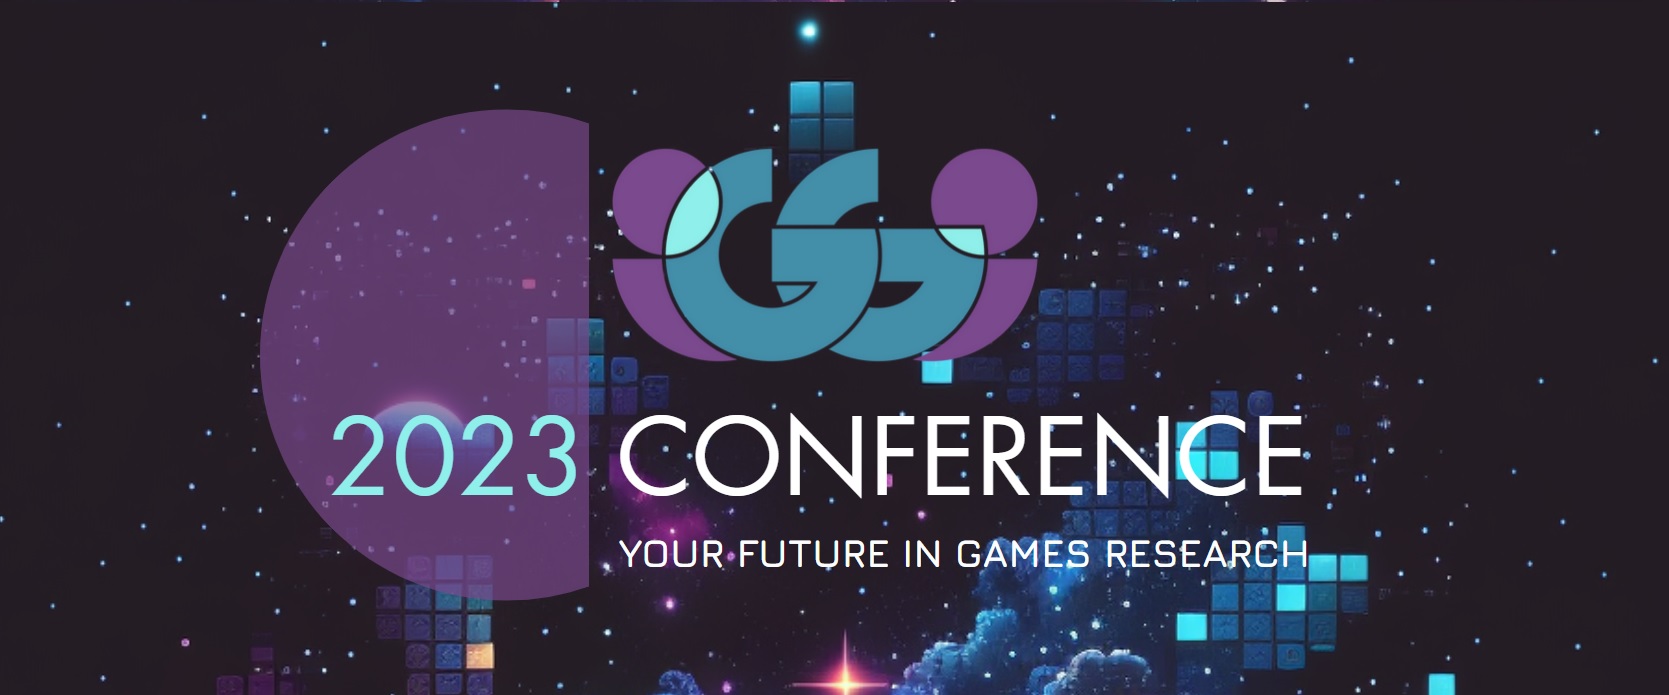 iGGi Conference logo